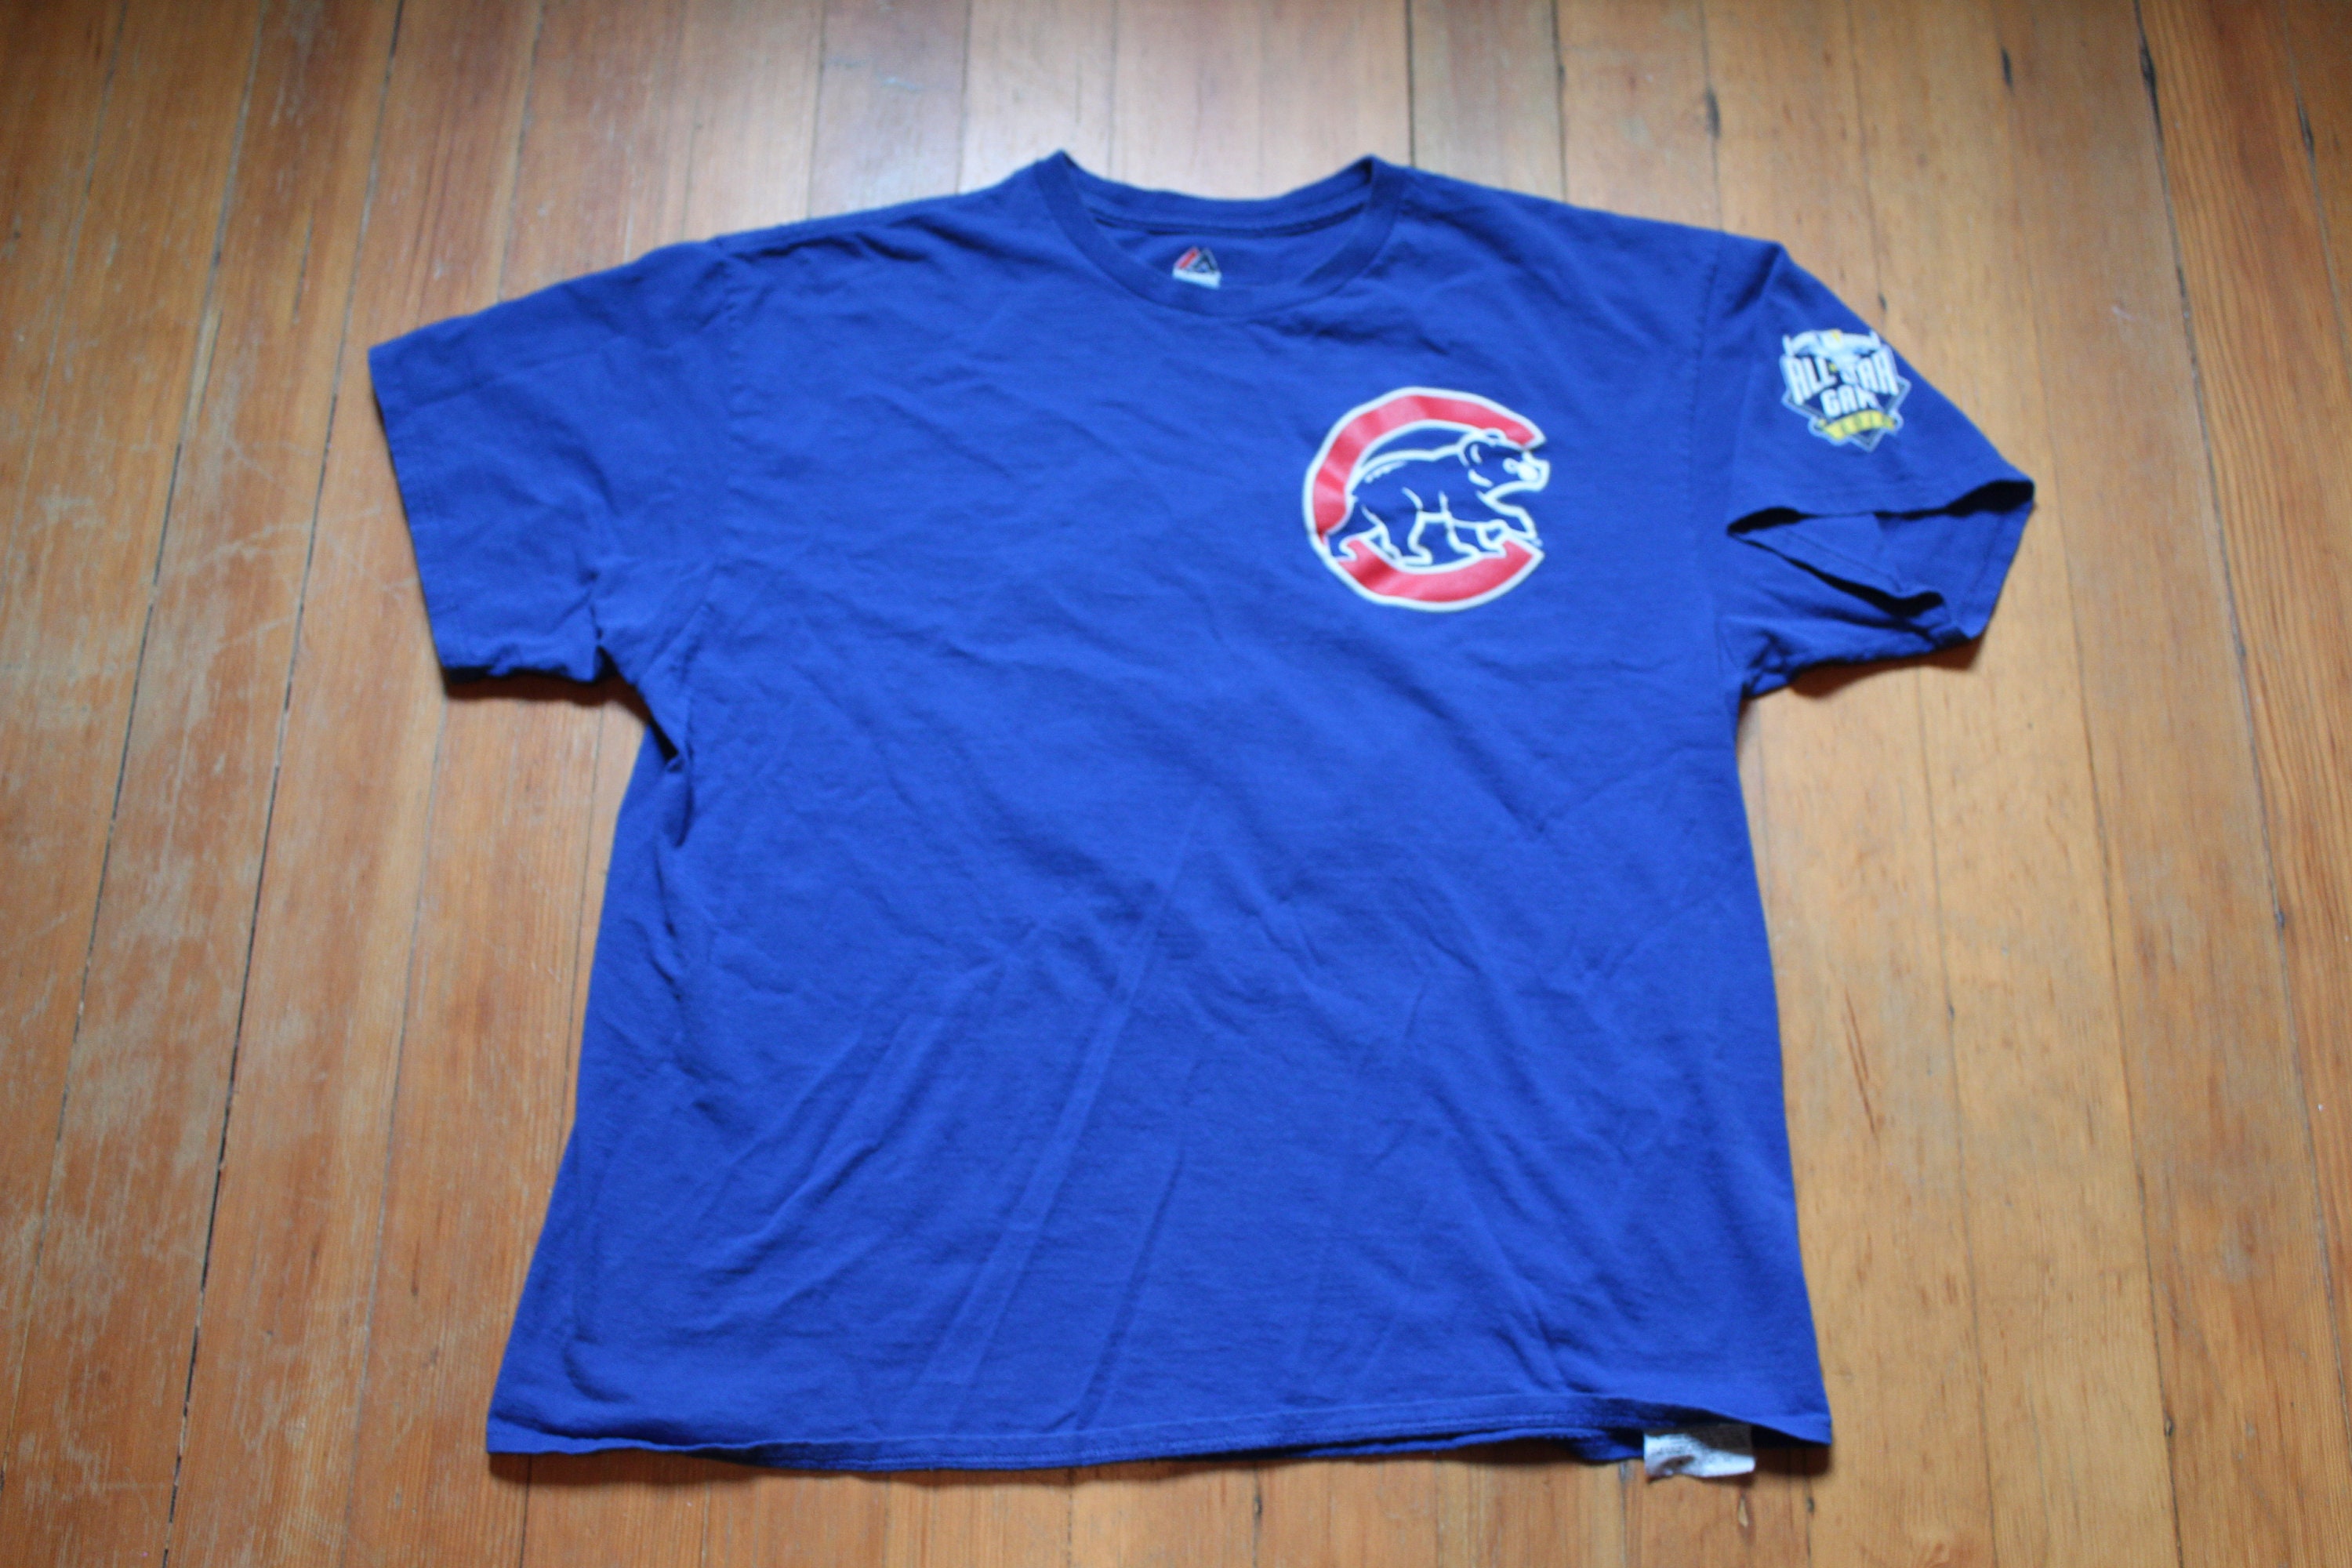 Kosuke Fukudome Chicago Cubs Name and Number T-Shirt (Large, Navy